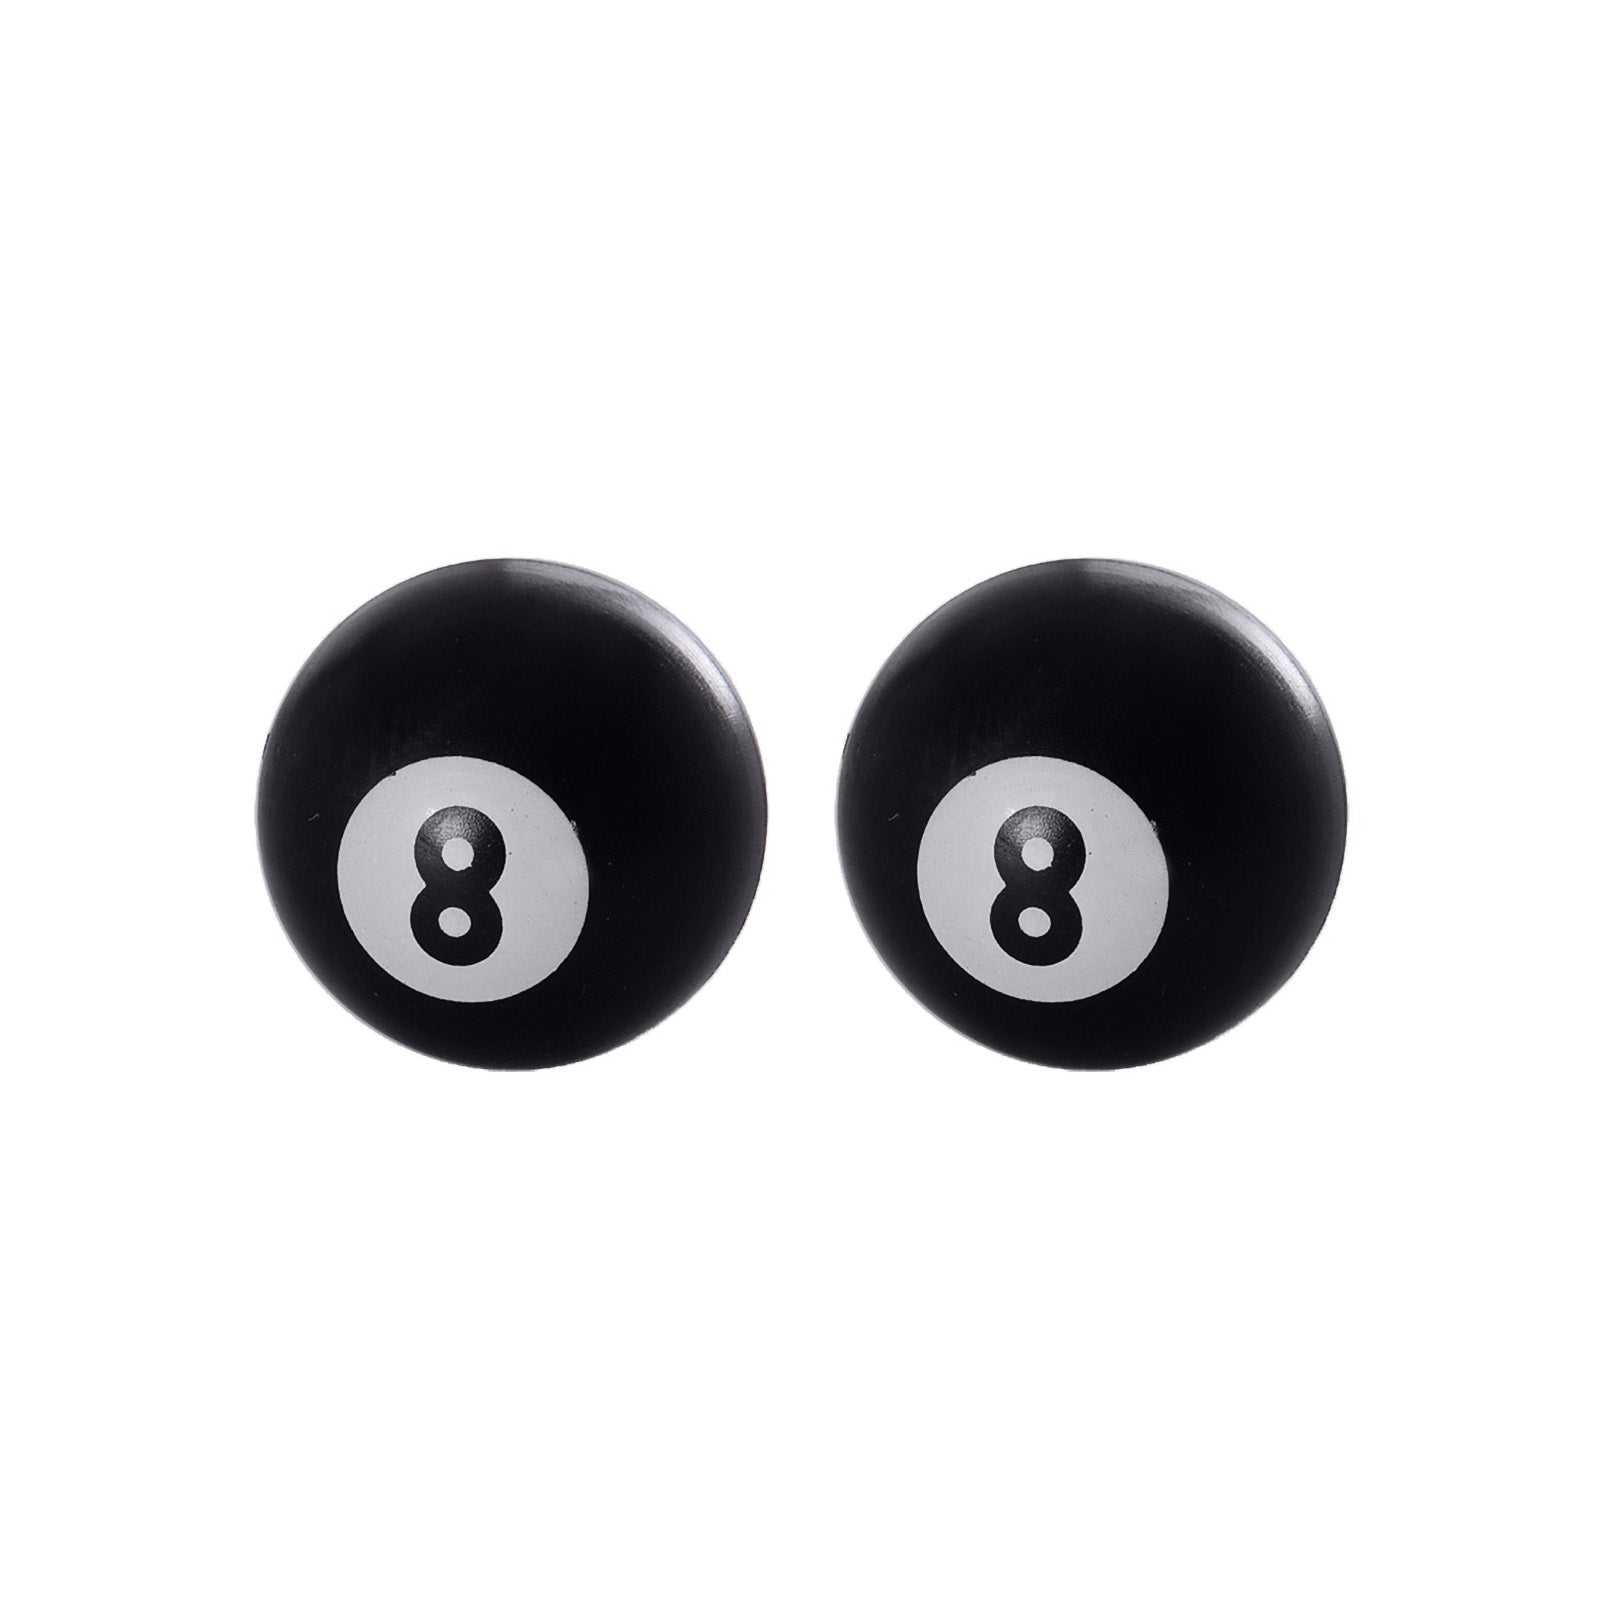 Oxford, Oxford 8 Ball Valve Caps Black